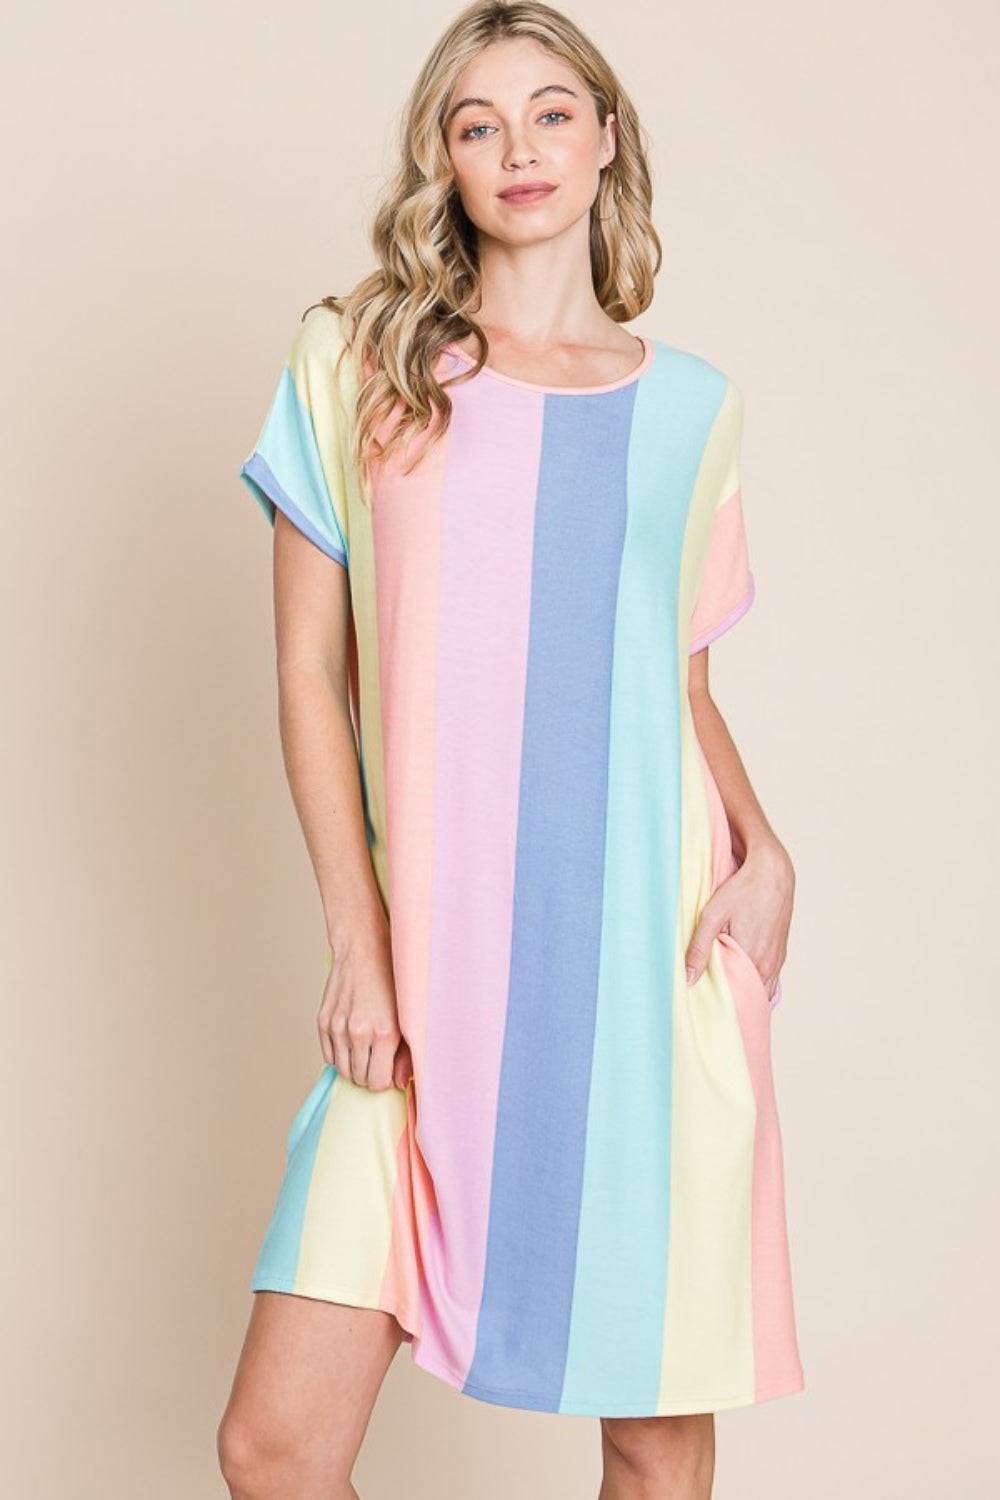 a woman wearing a multicolored shift dress